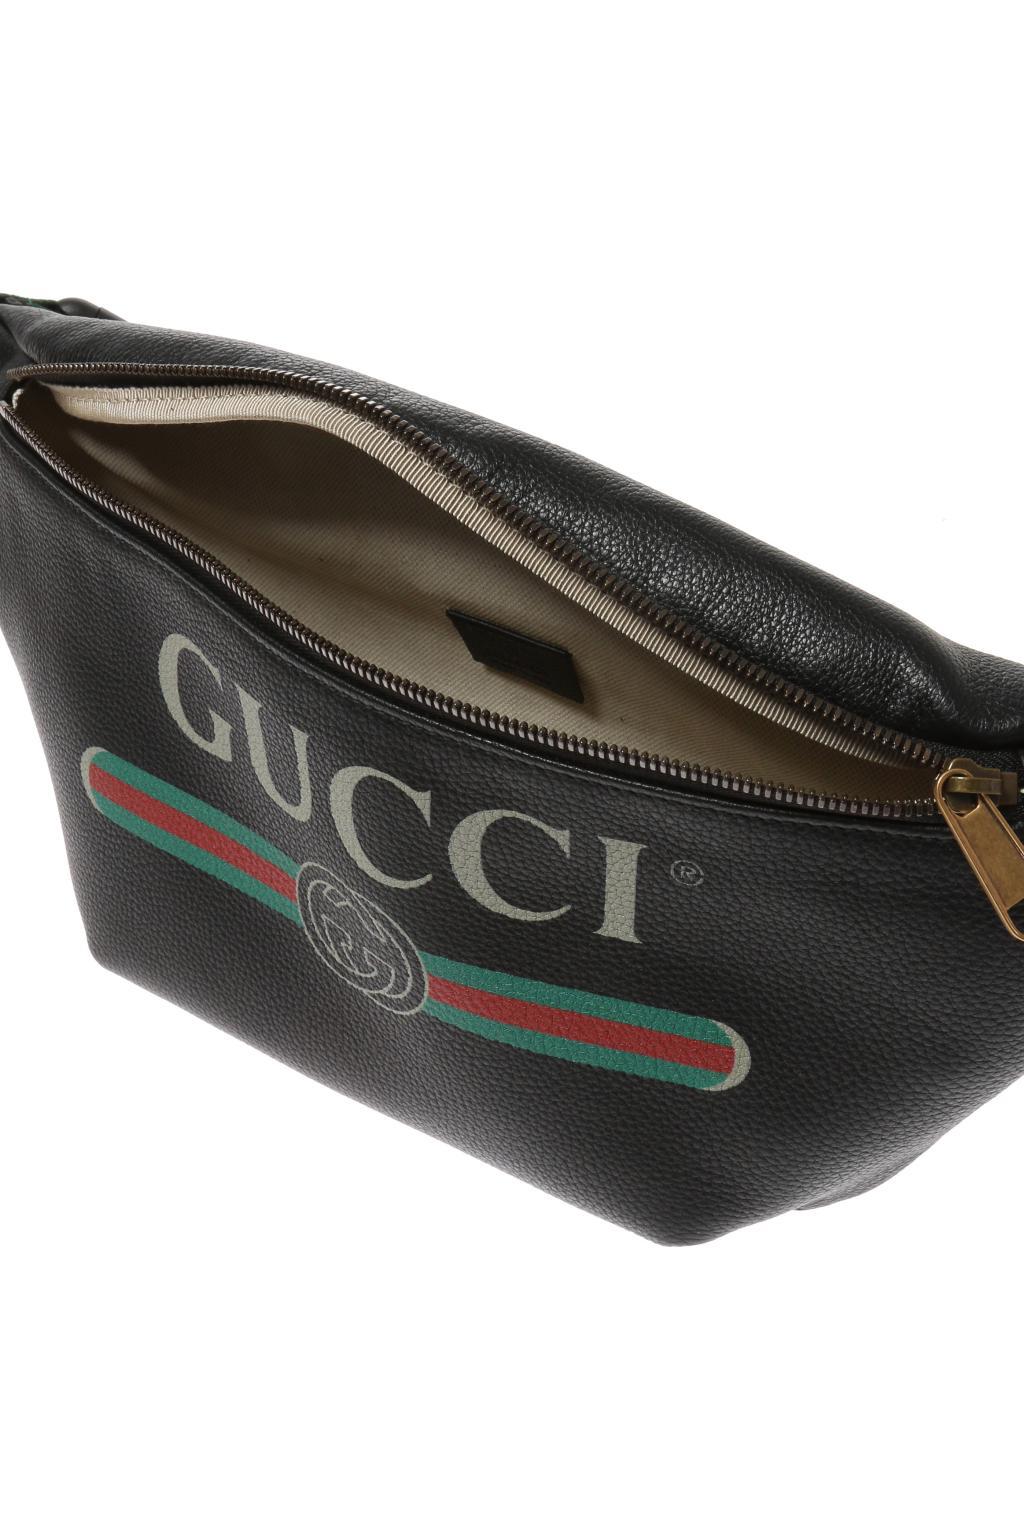 Gucci Black Fake Logo Print Leather Cross-body Bag for Men - Lyst